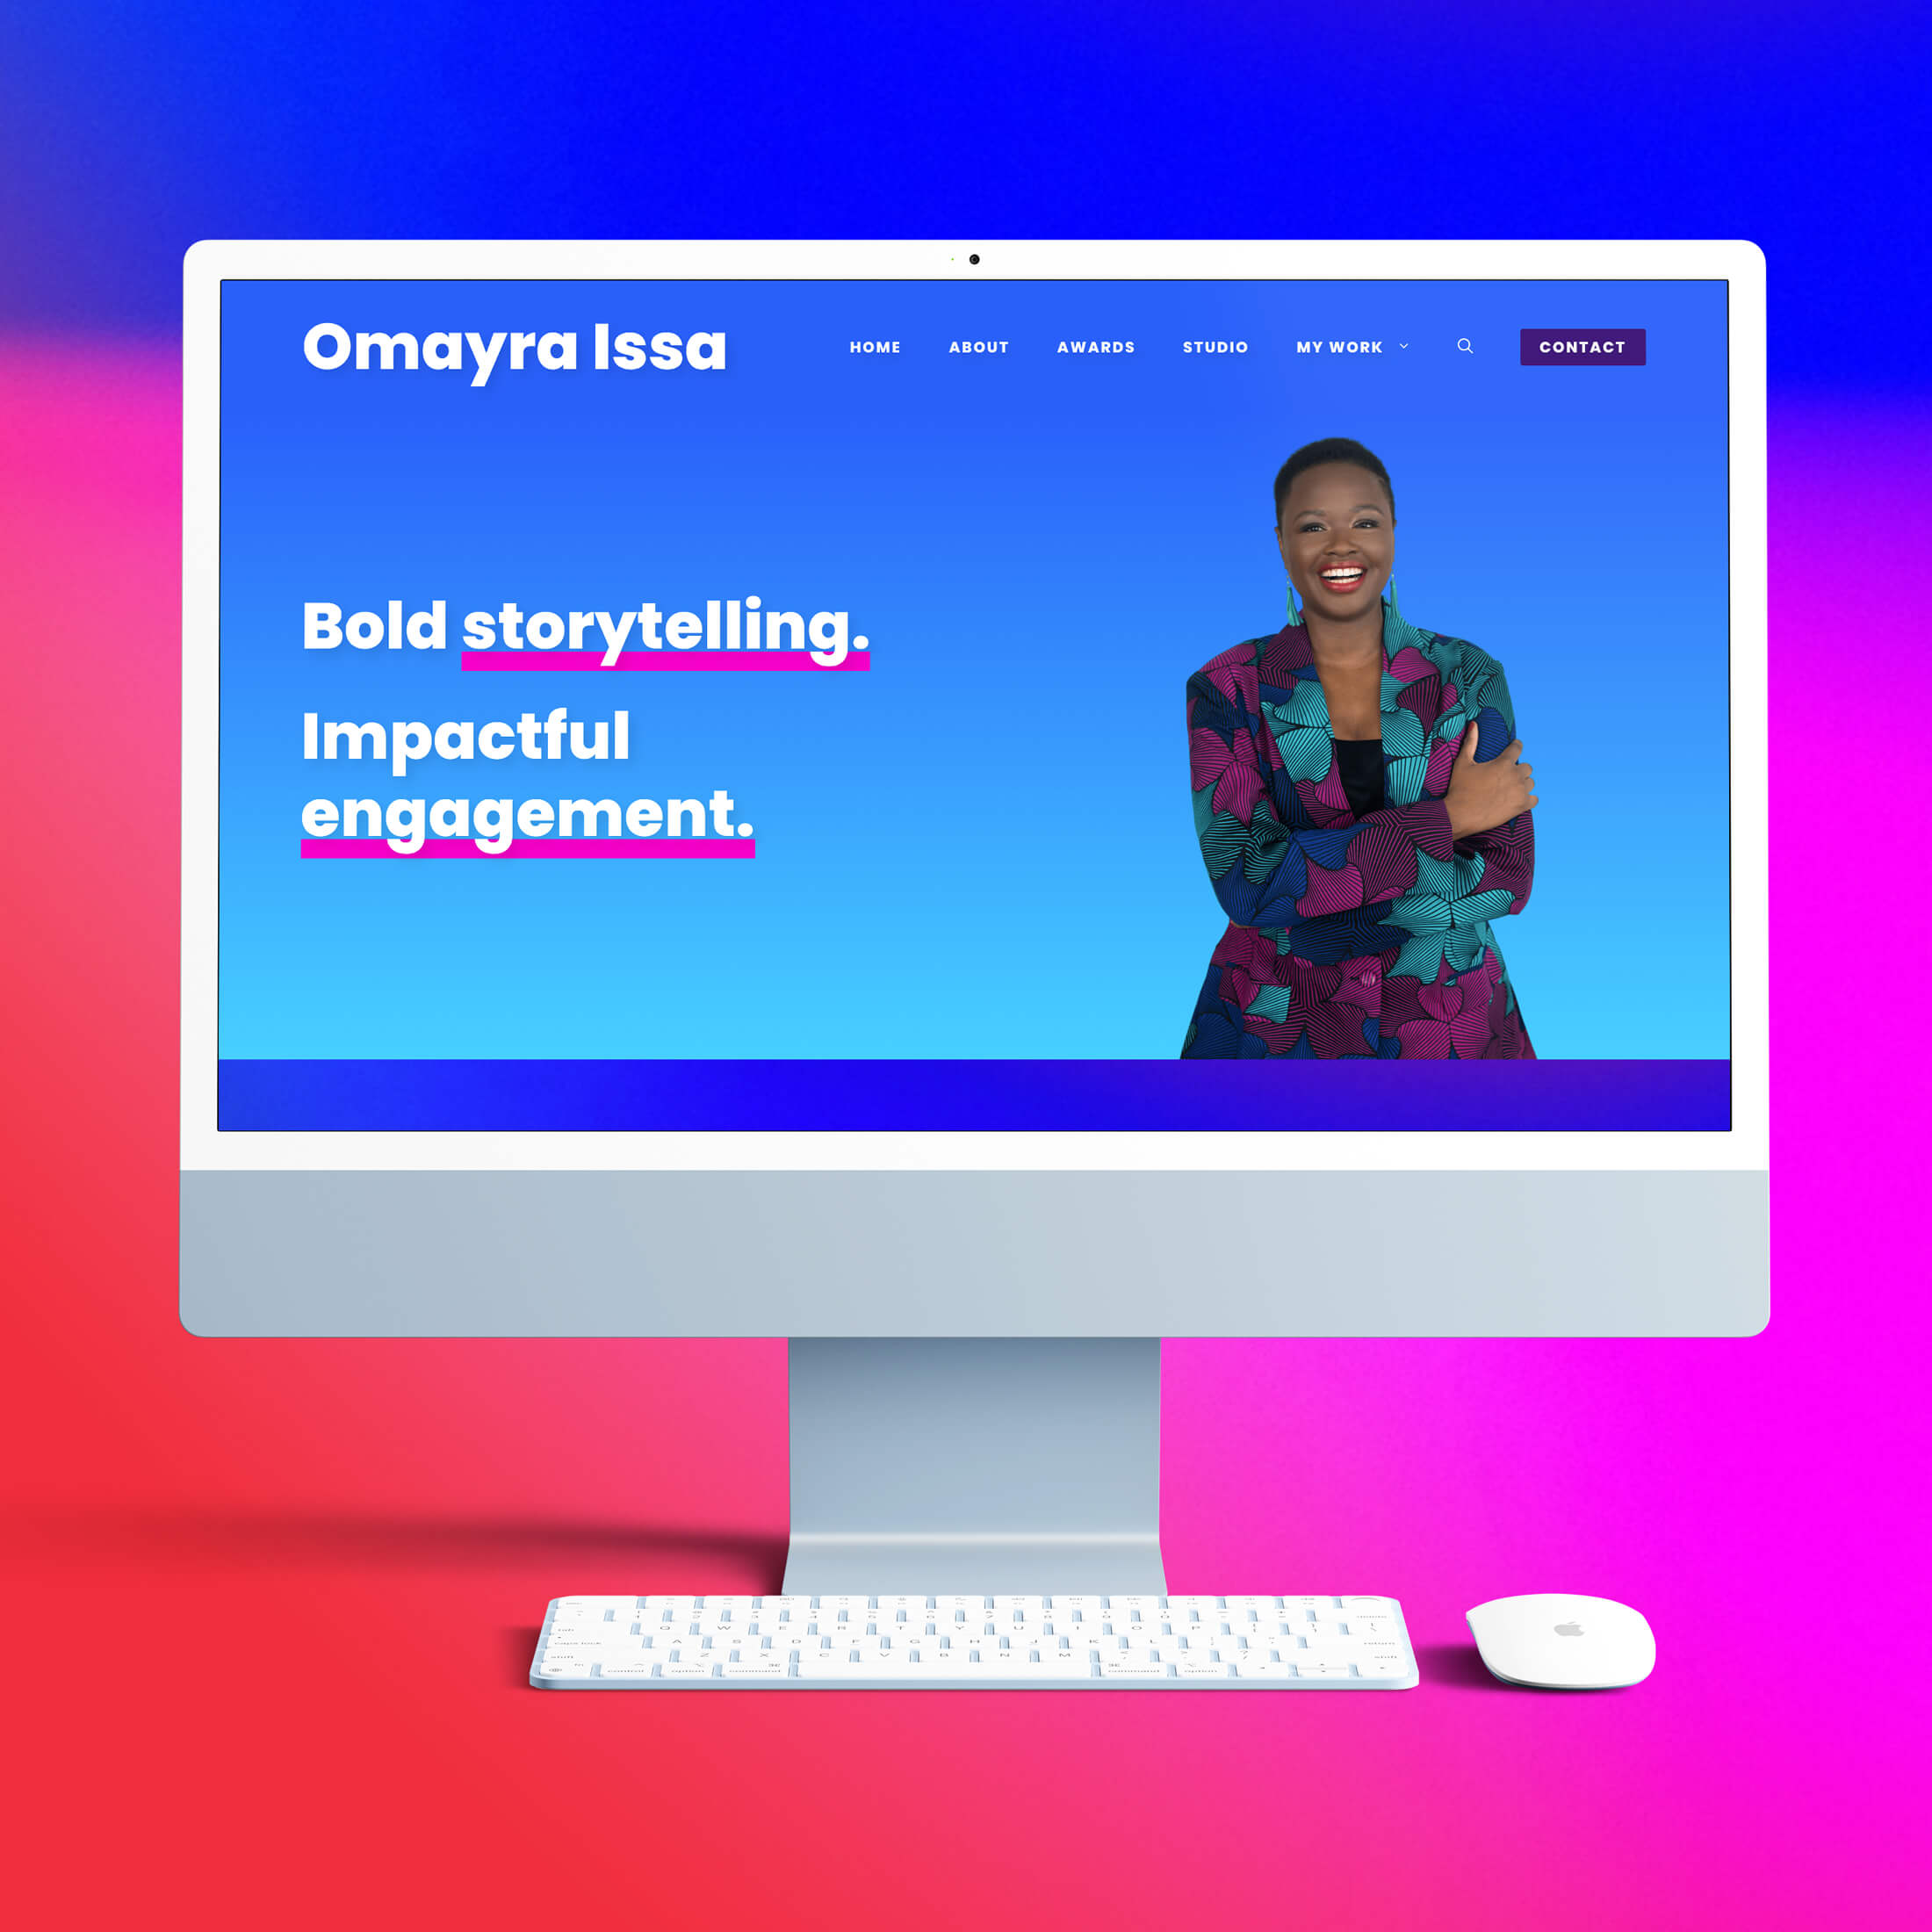 WordPress website design for Omayra Issa by Tulip Tree Creative